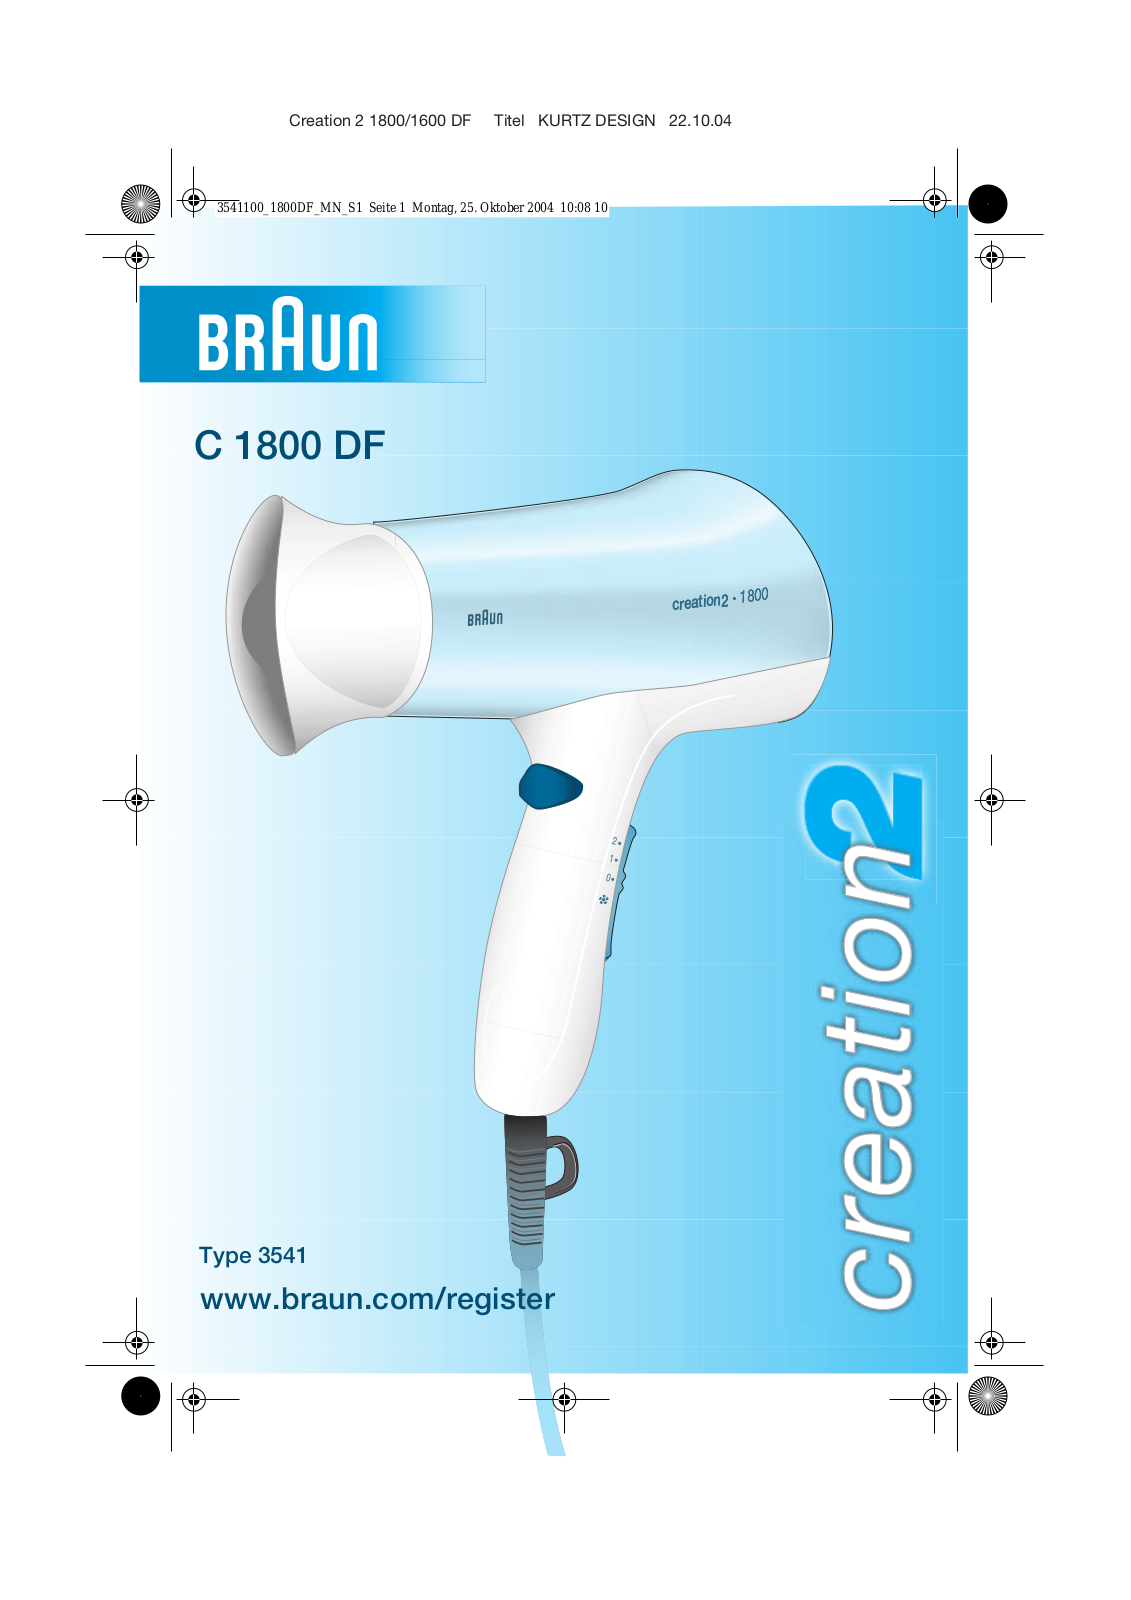 Braun DF creation2 User Manual